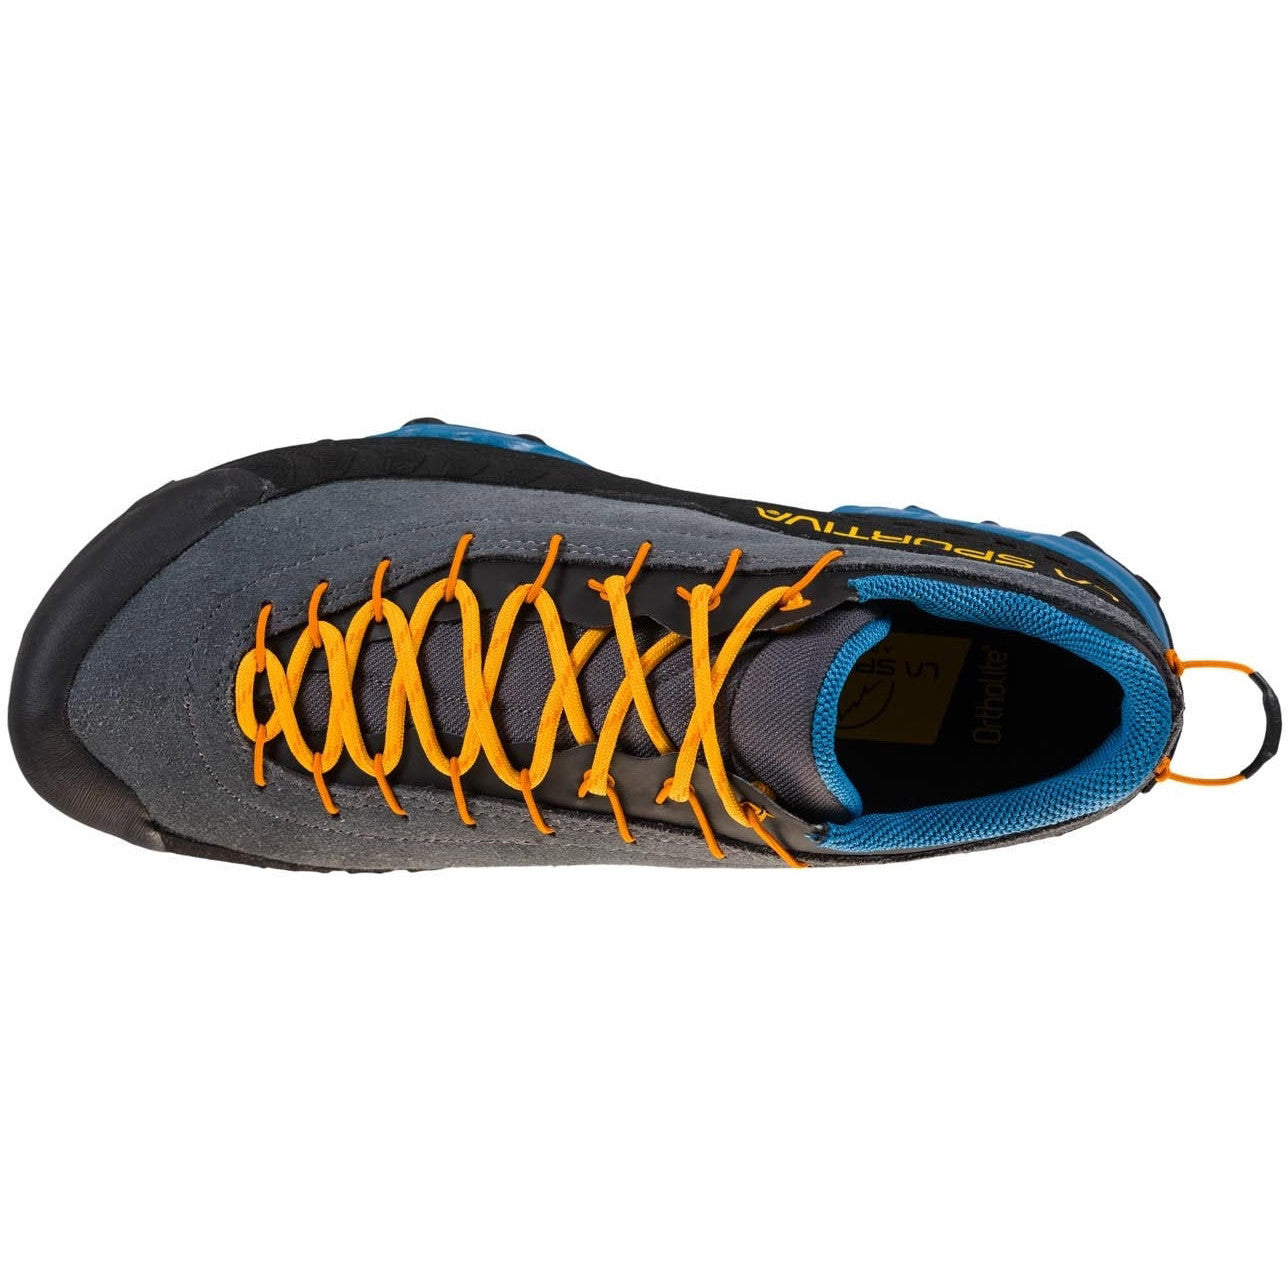 La Sportiva TX4 GTX Hiking Shoe (Men's) - Blue/Papaya - Find Your Feet Australia Hobart Launceston Tasmania